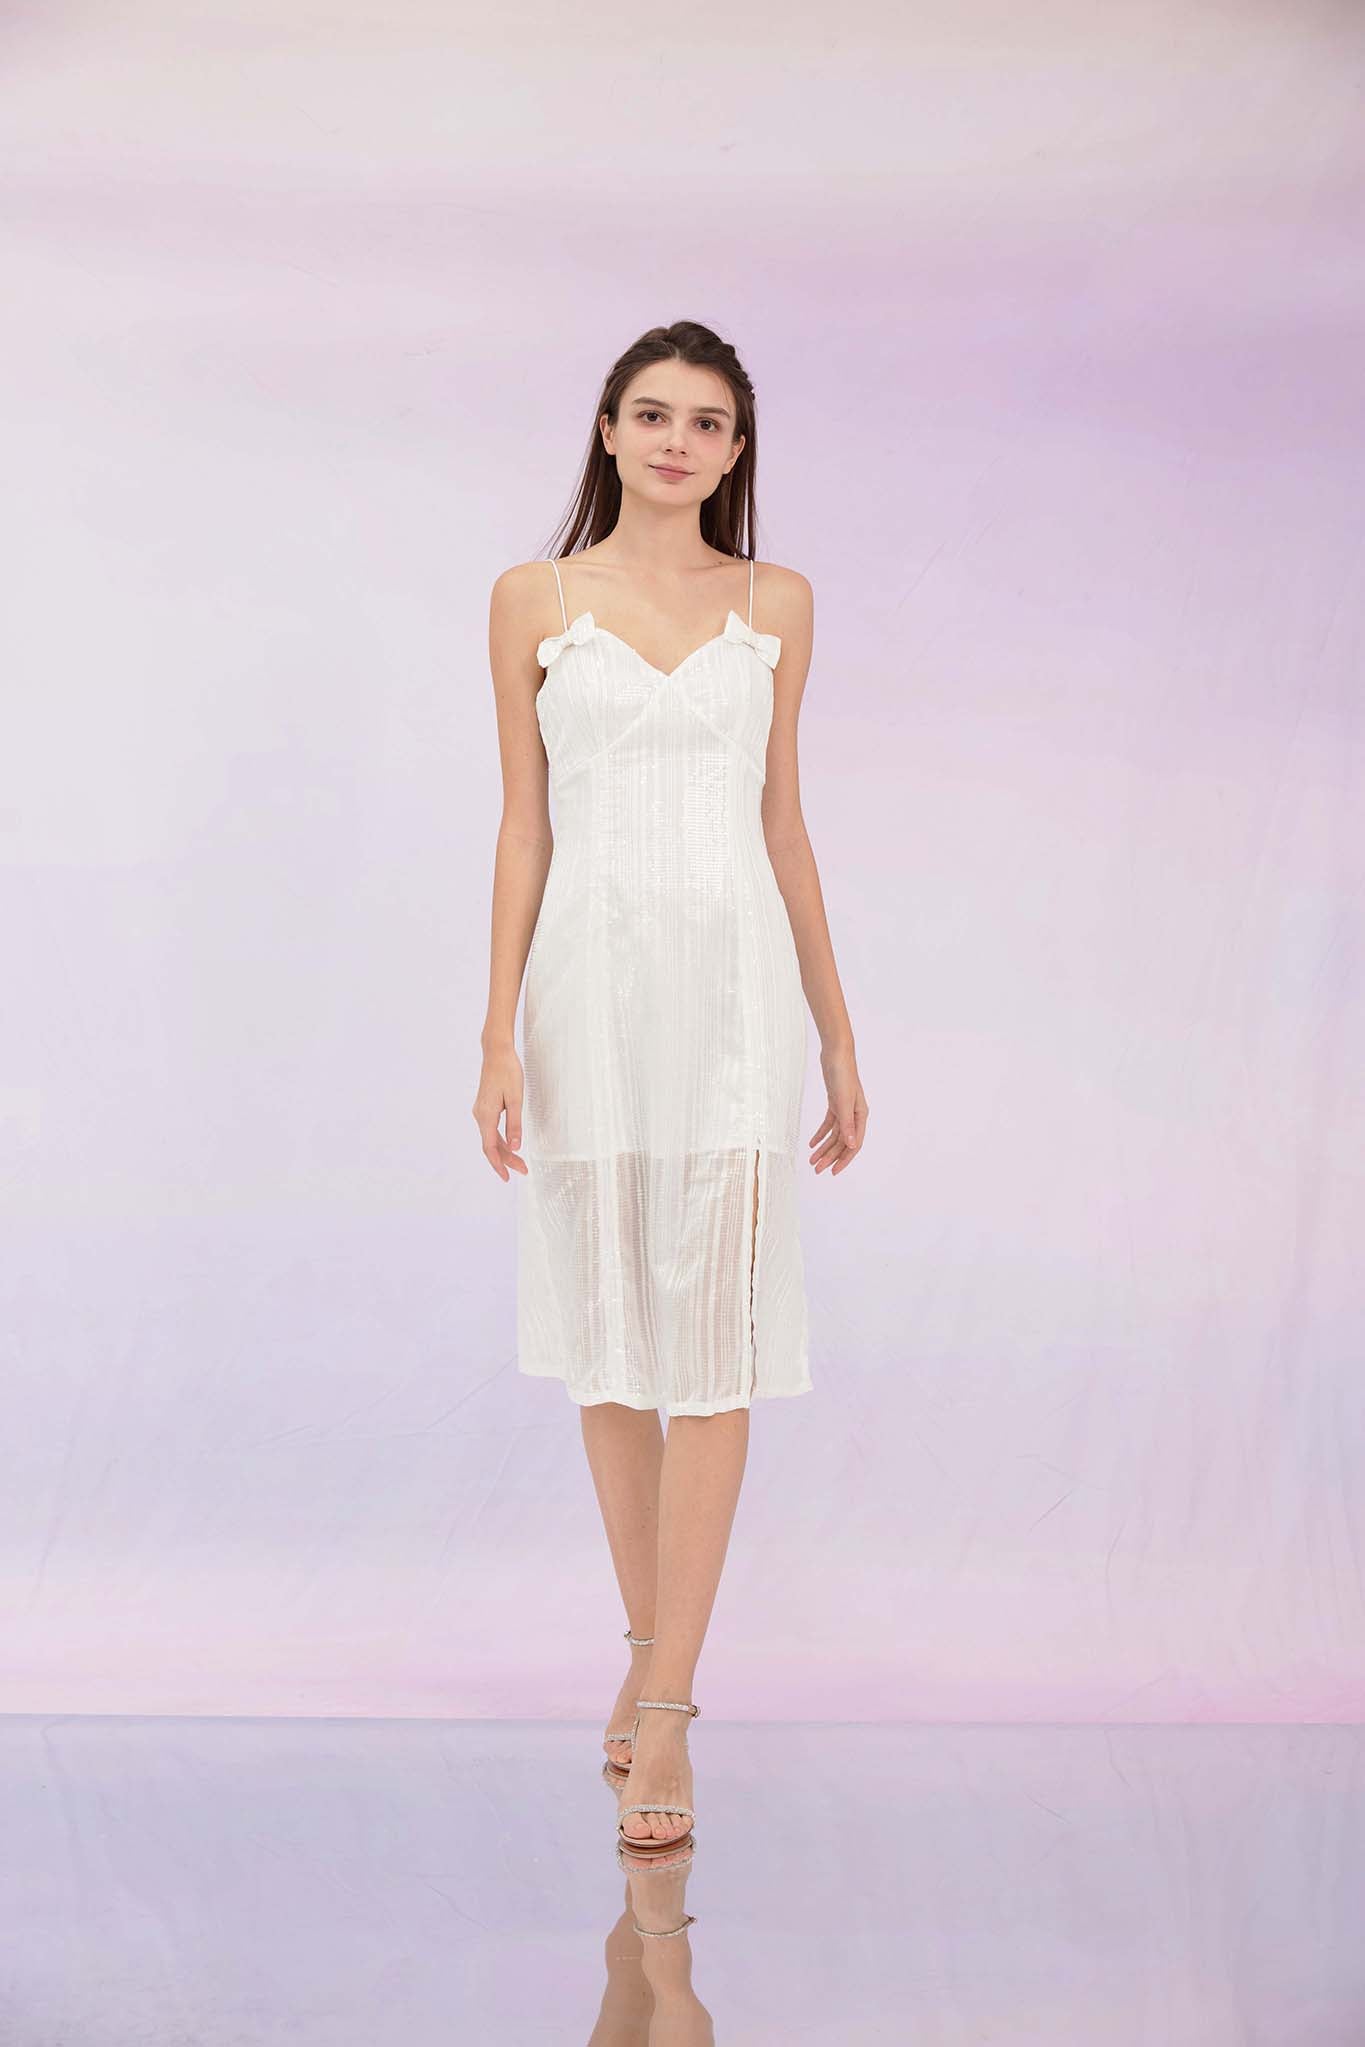 Germaine White Sequin Slip Dress